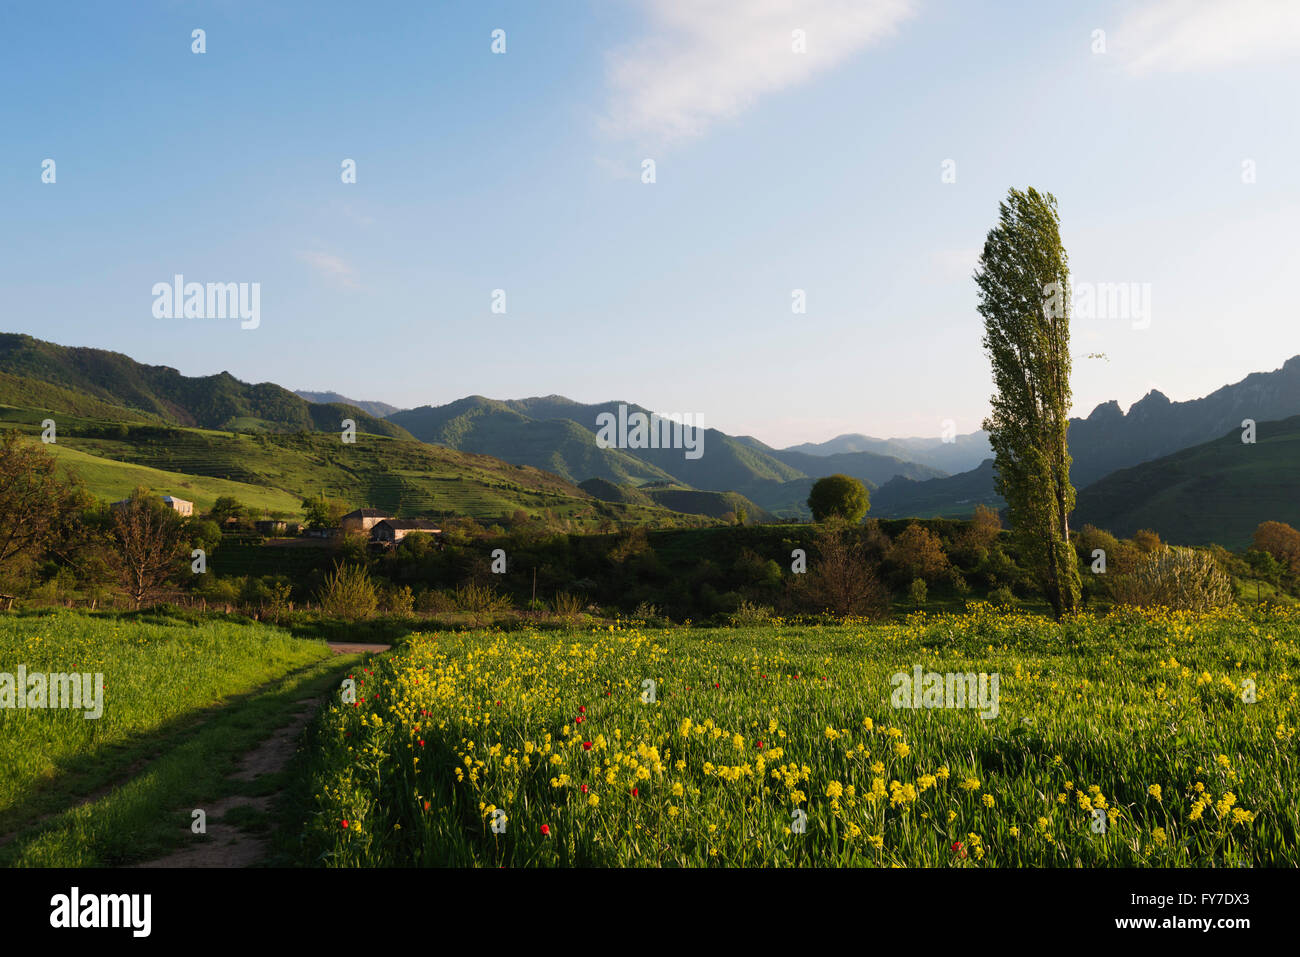 Eurasia, Caucasus region, Armenia, Tavush province, Chinari, rural scenery Stock Photo